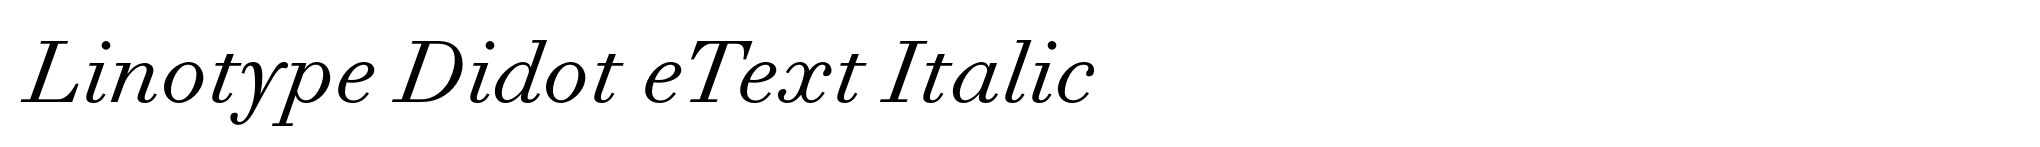 Linotype Didot eText Italic image